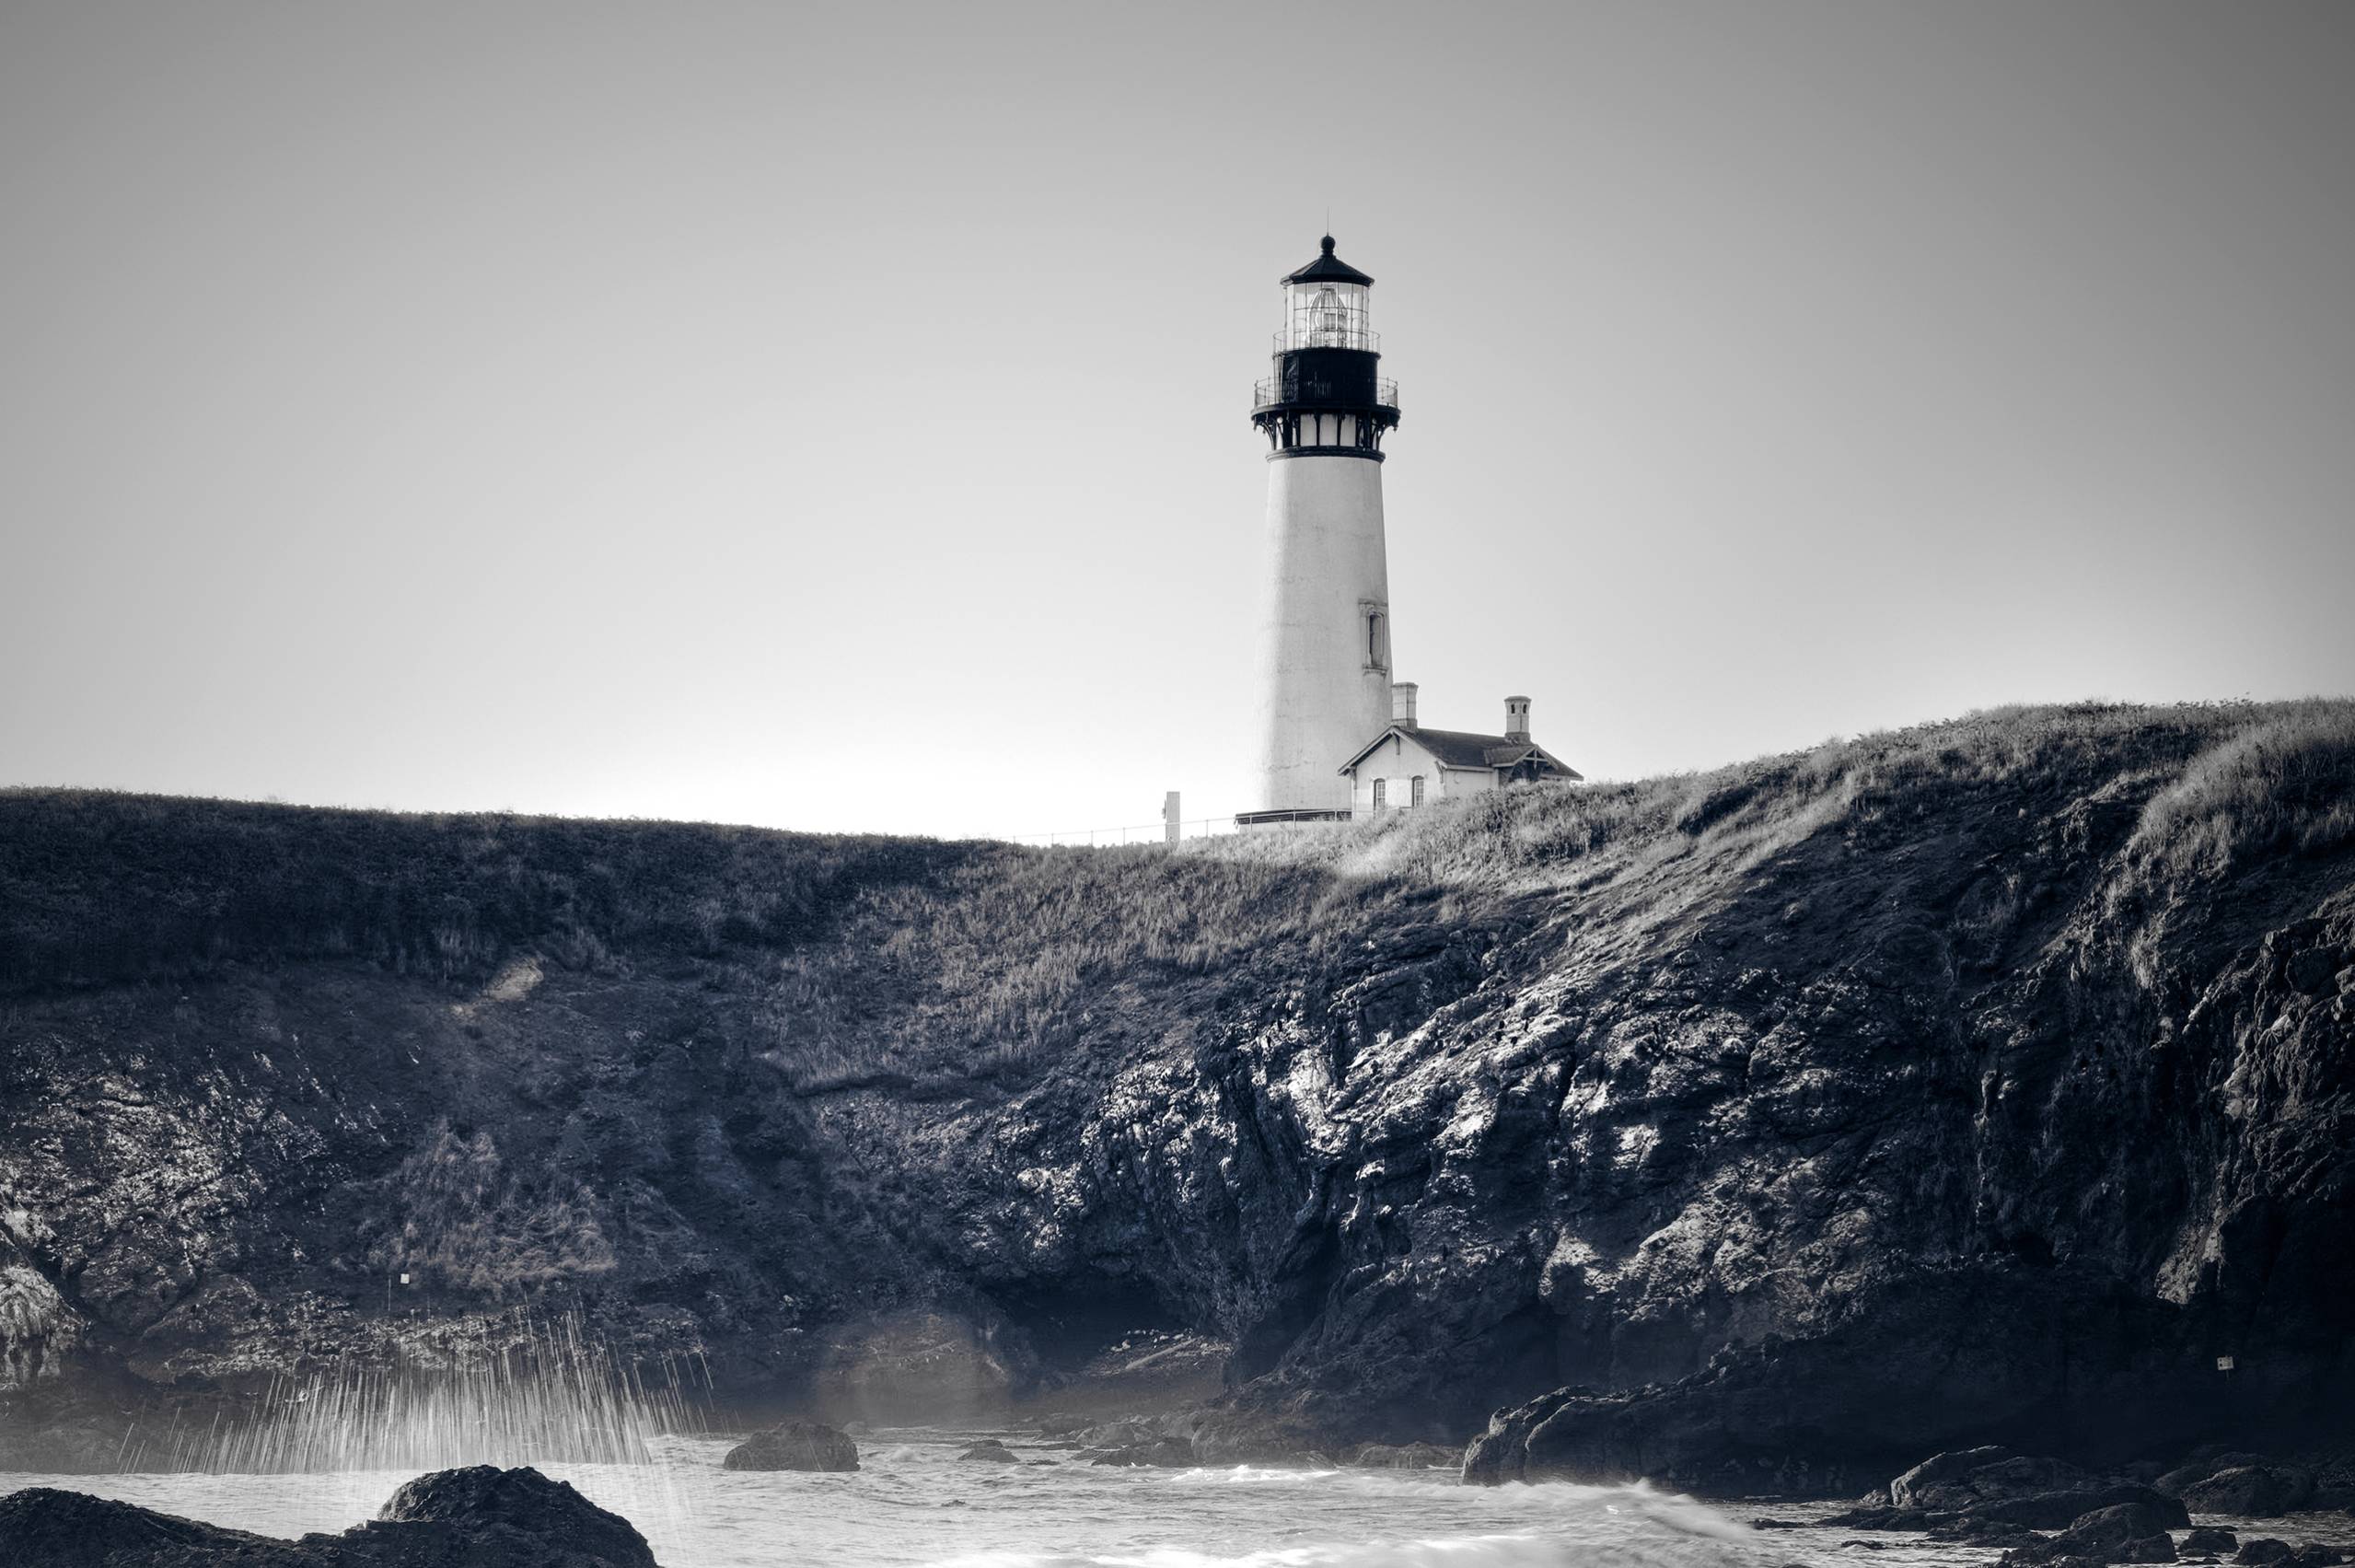 A light house stands guard on a rocky coast.